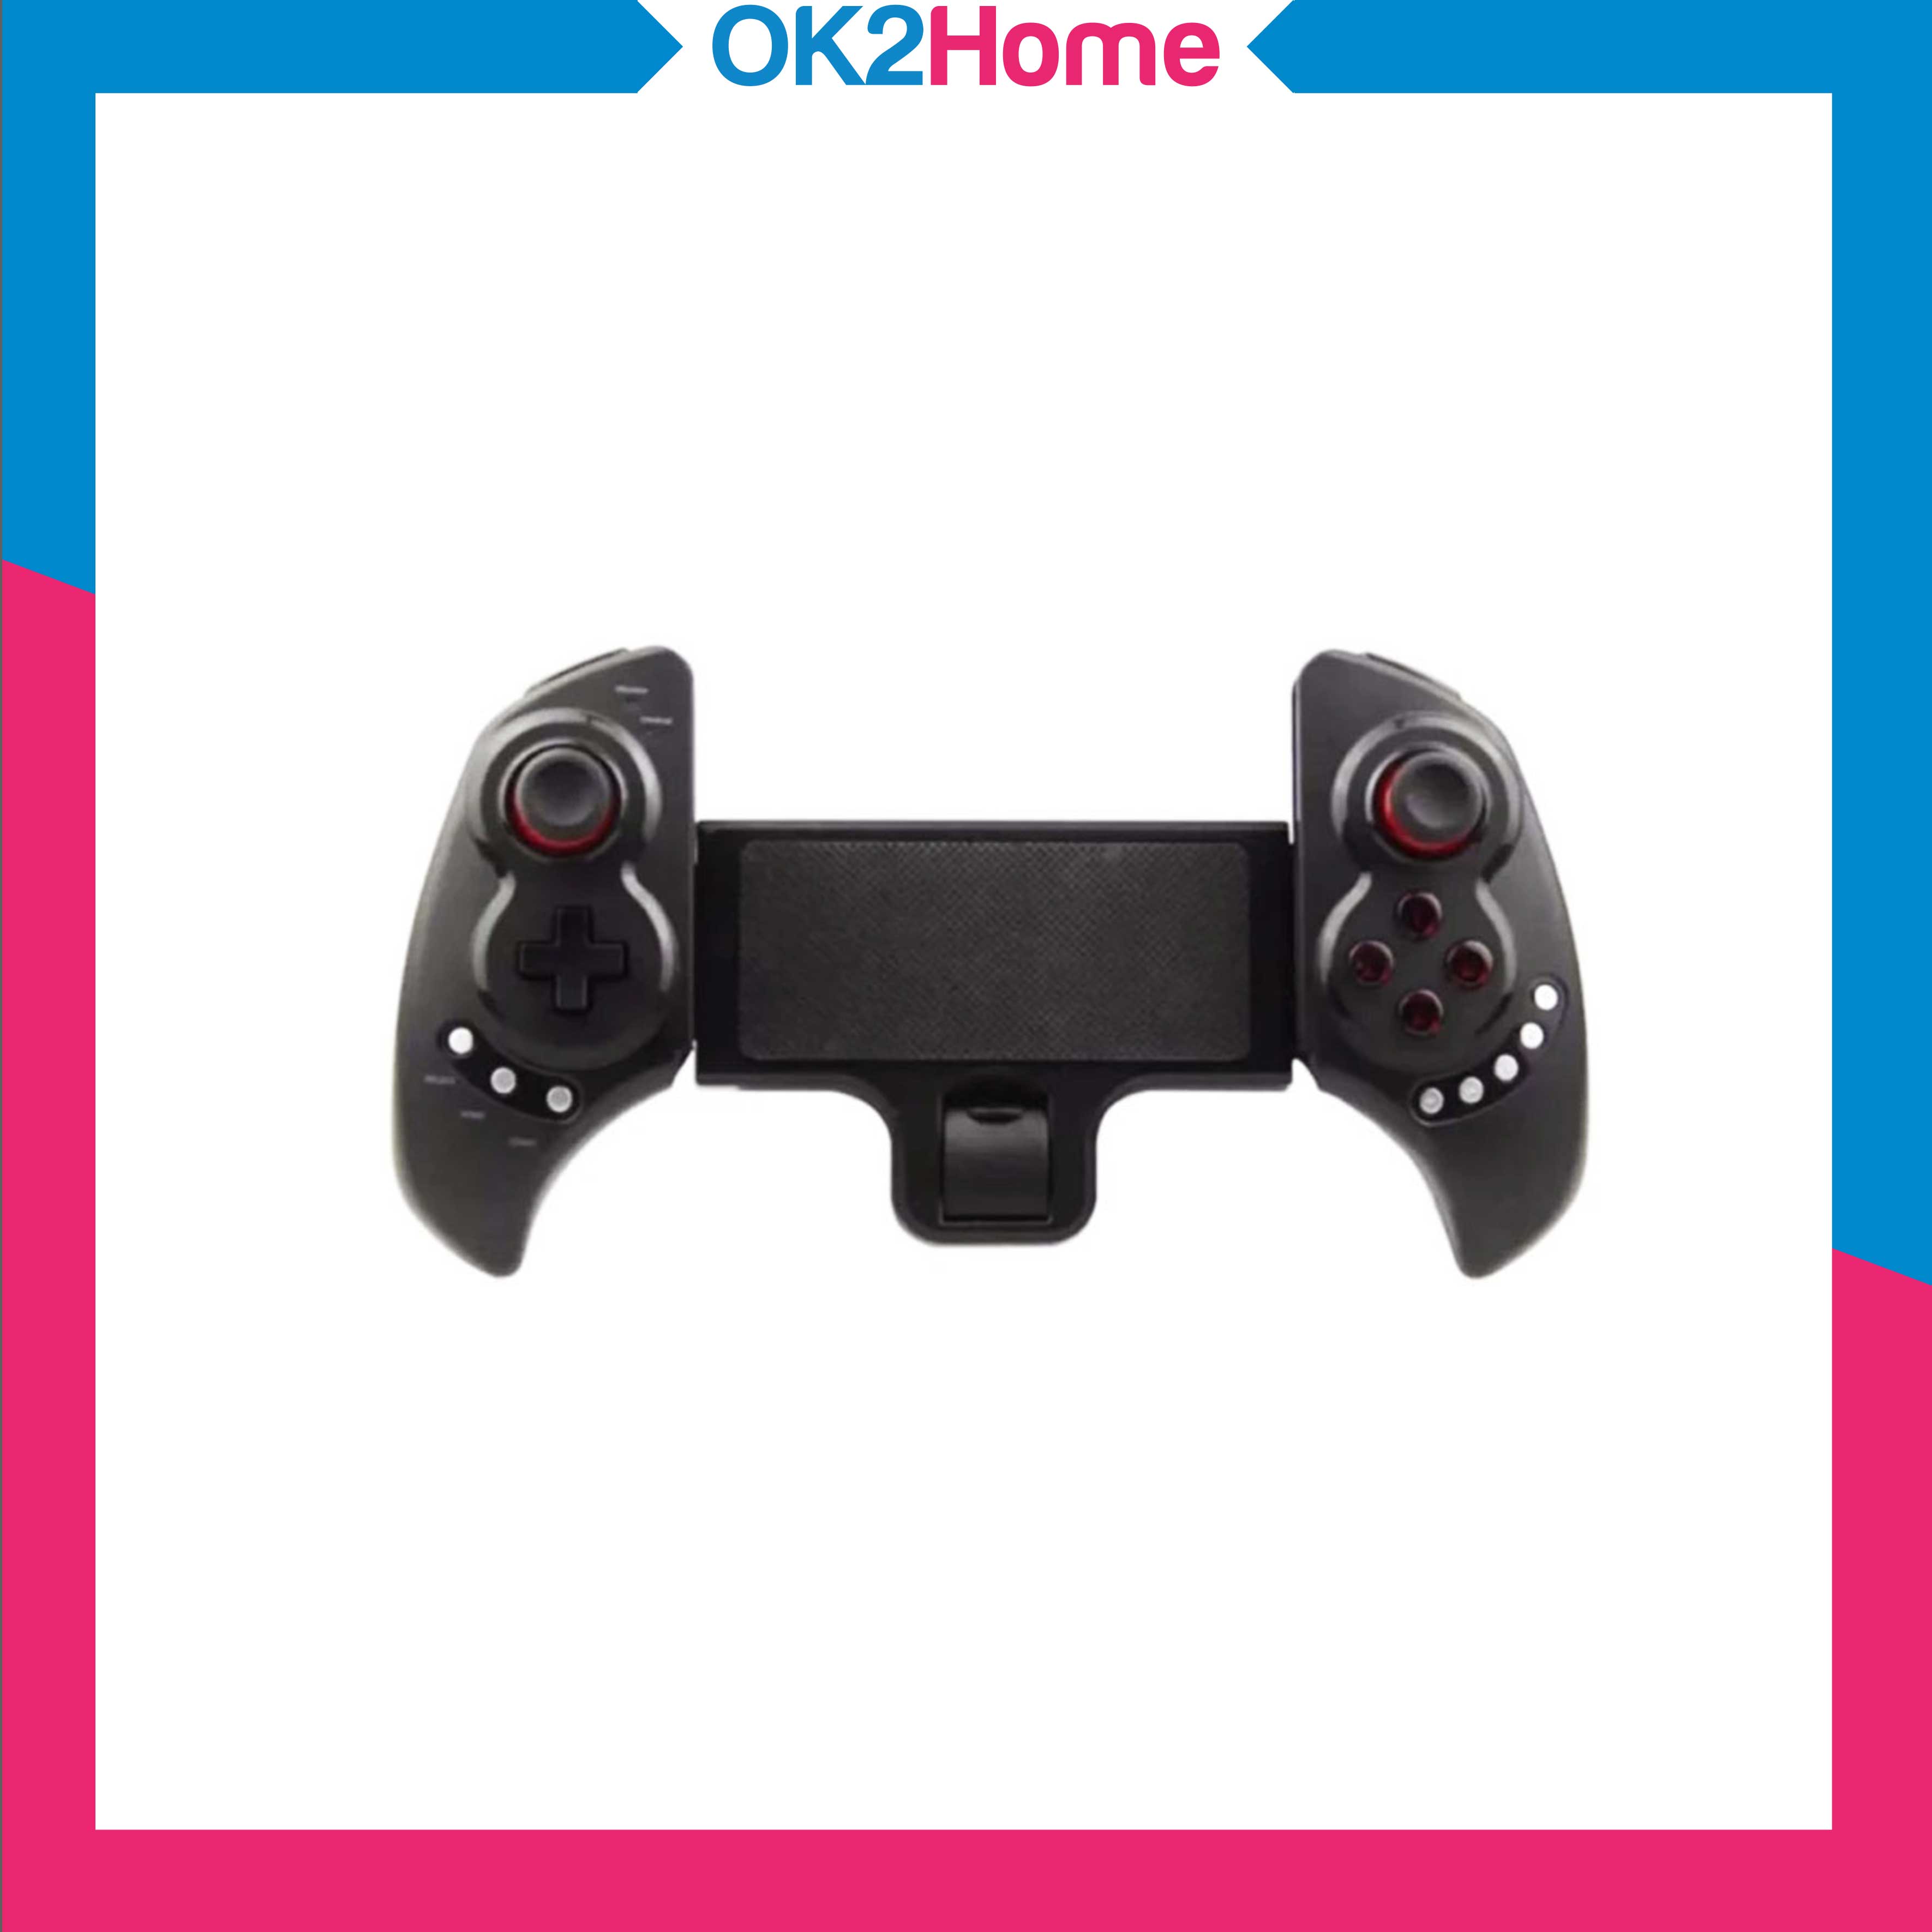 OKER PG-9023 Gaming Joy Bluetoothจอยเกมส์บลูทูธ สำหรับมือถือ/คอมพิวเตอร์